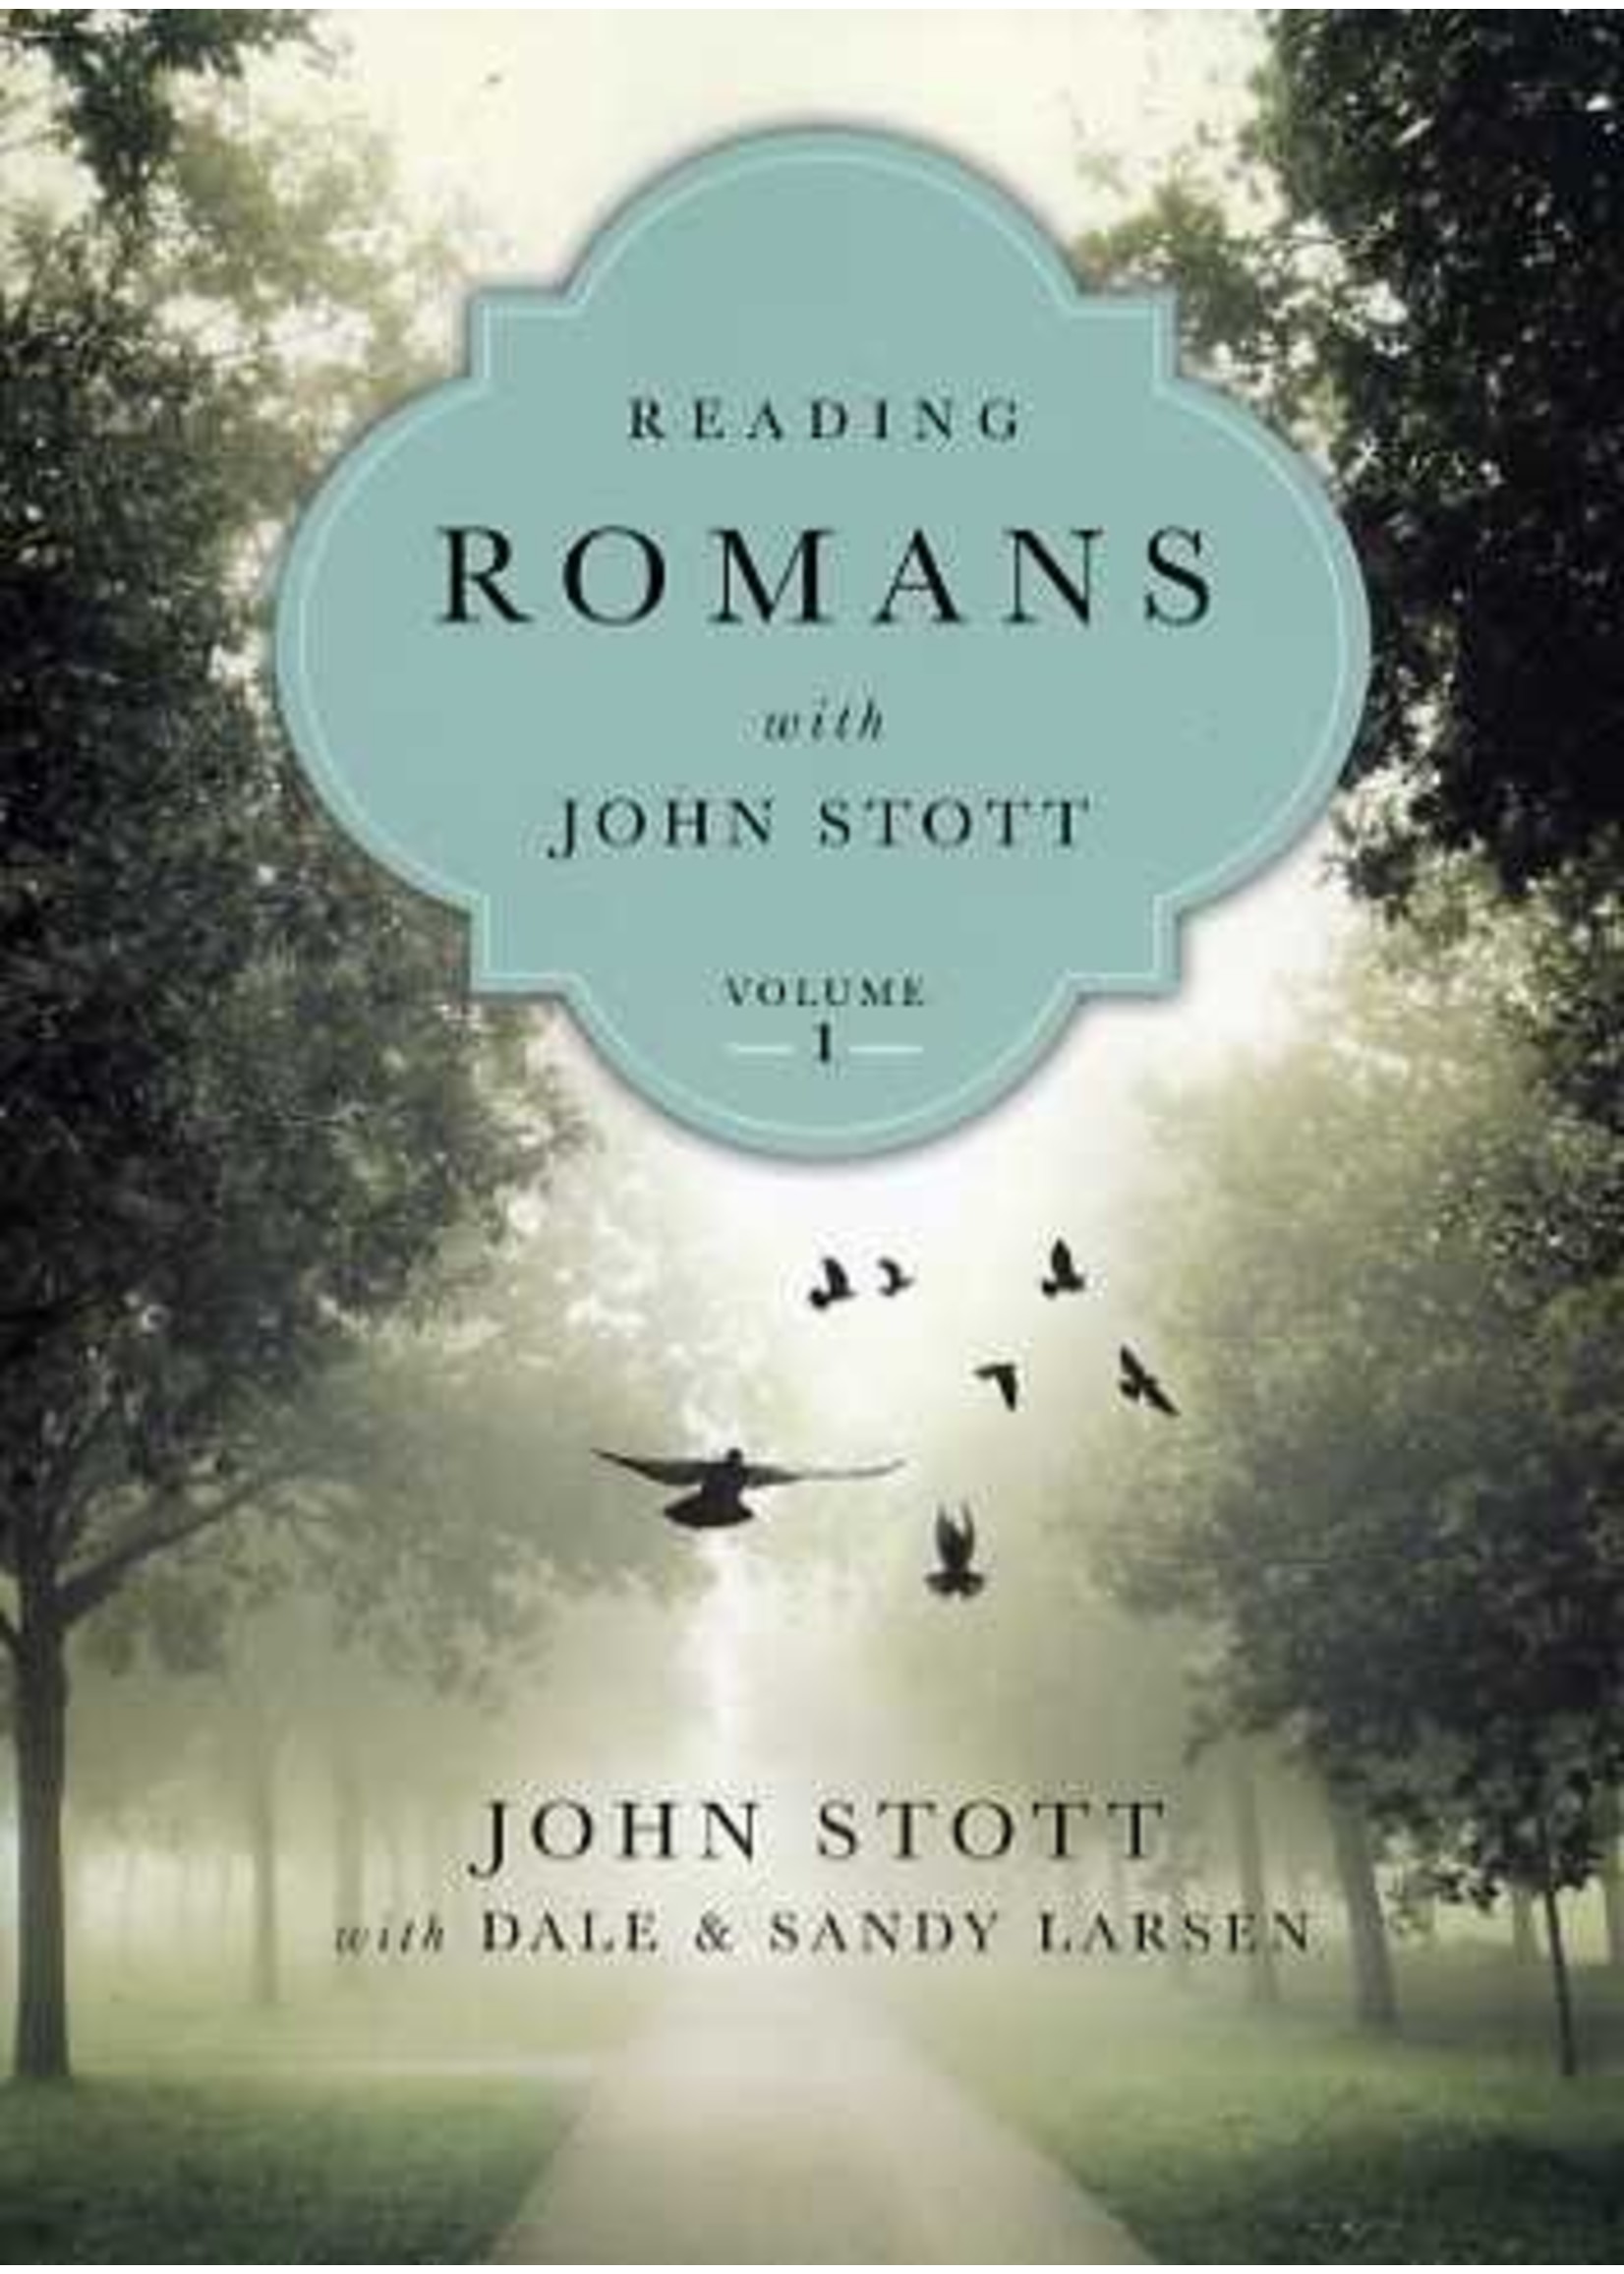 Reading Romans with John Stott Vol. 1 - John Stott